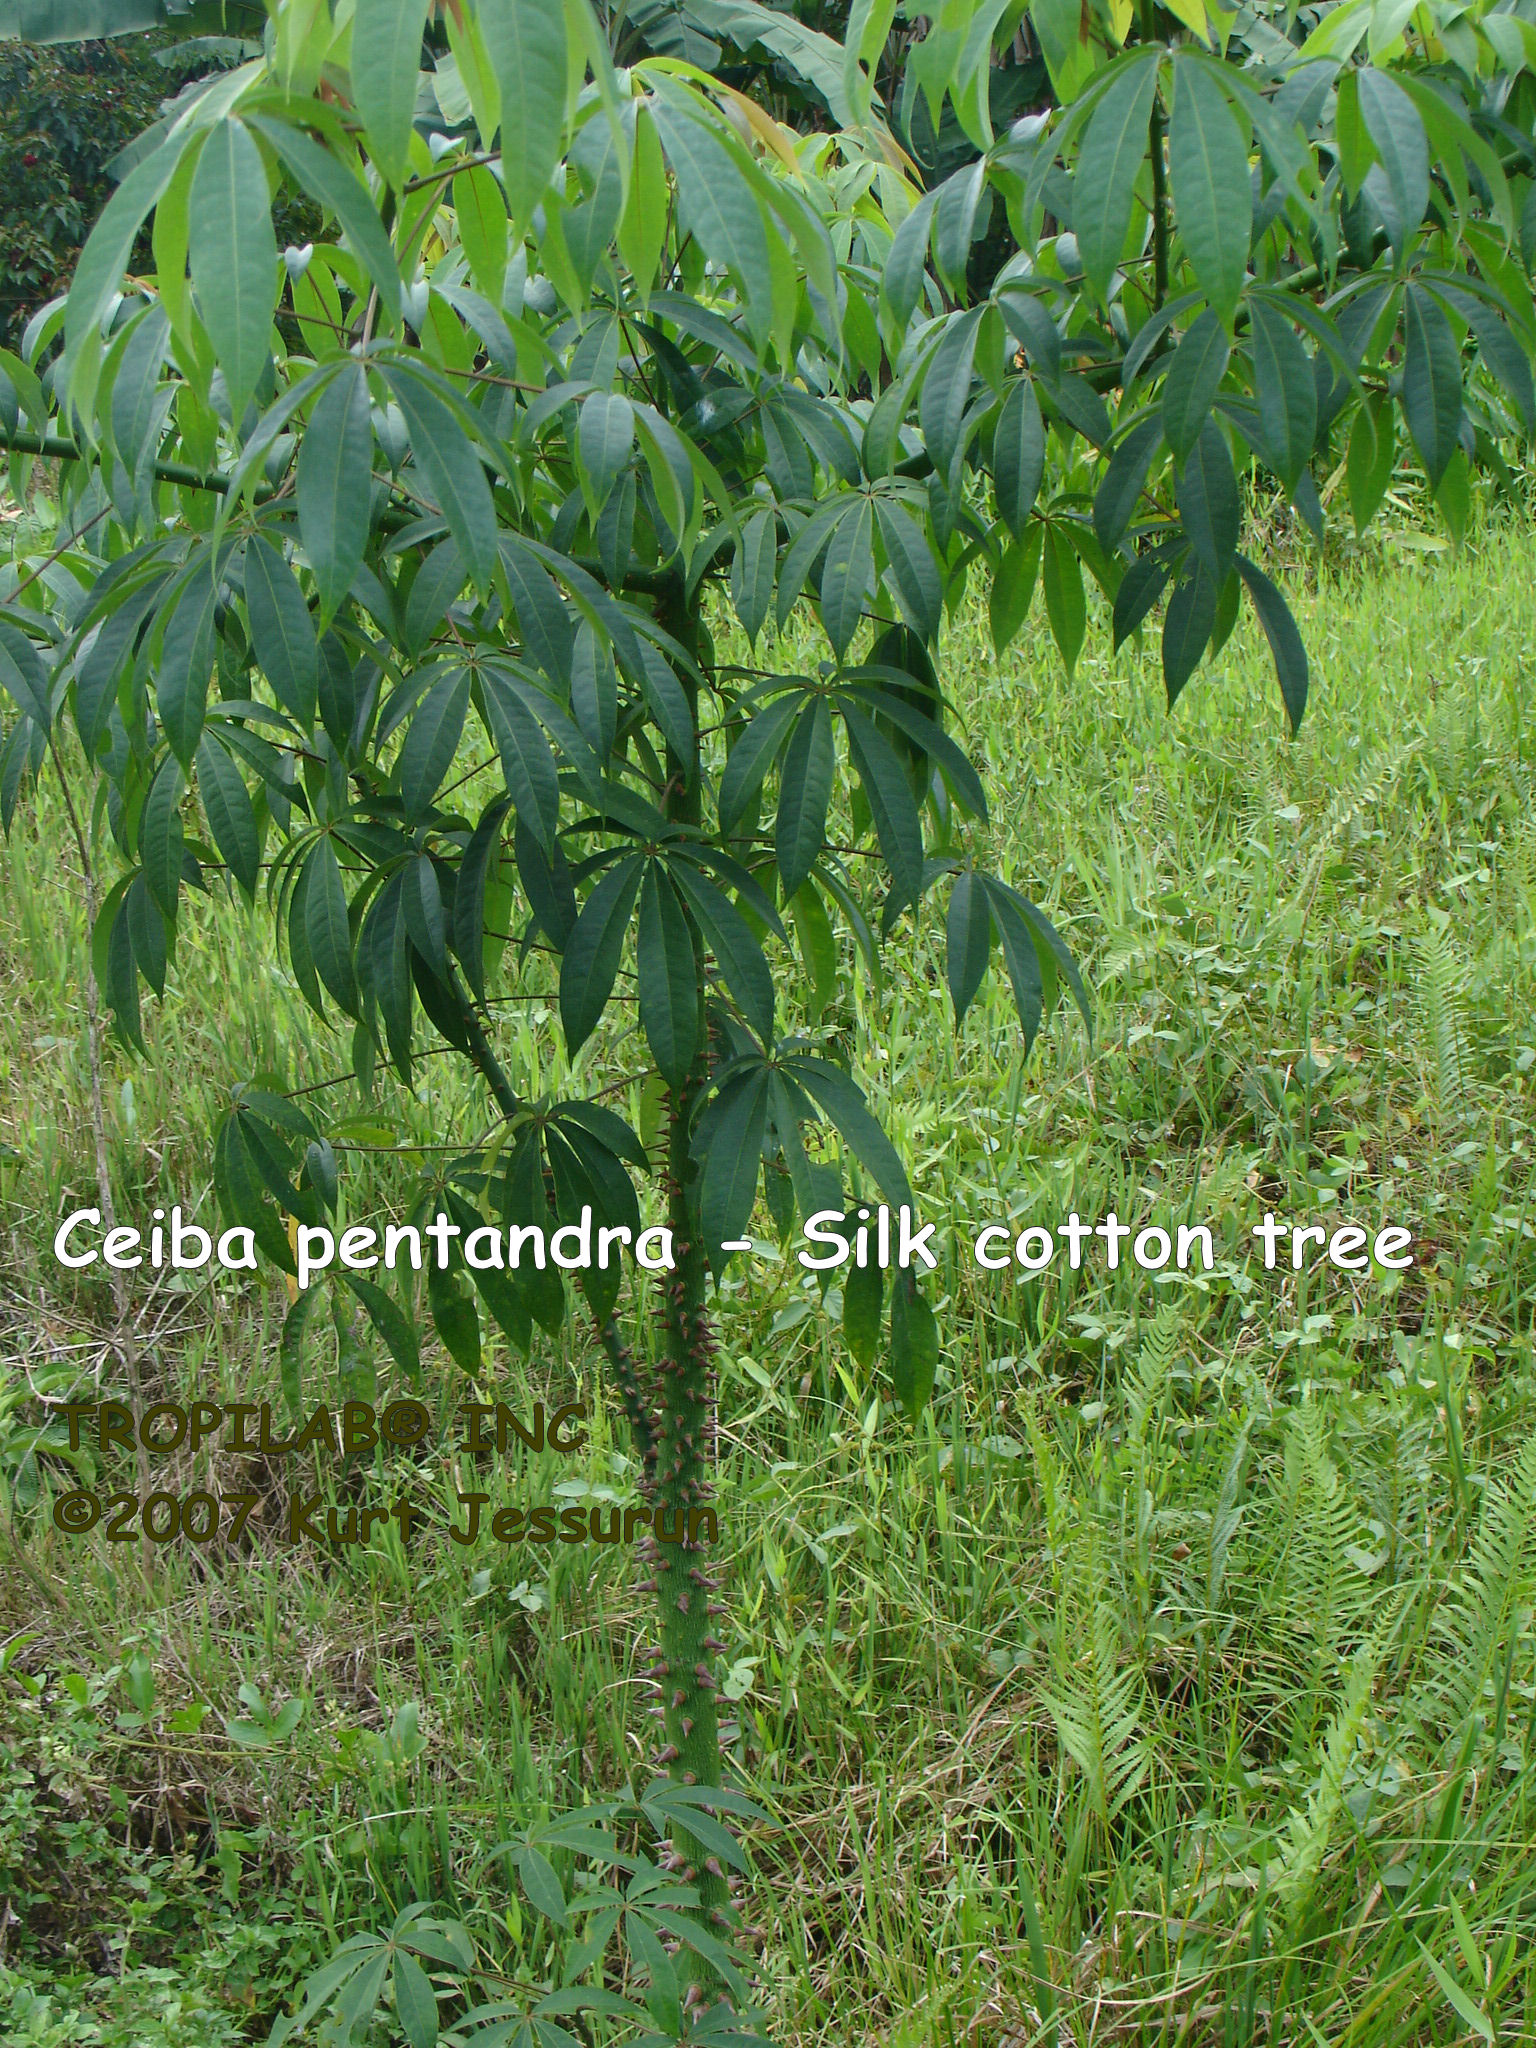 Ceiba pentandra - Kapok young tree